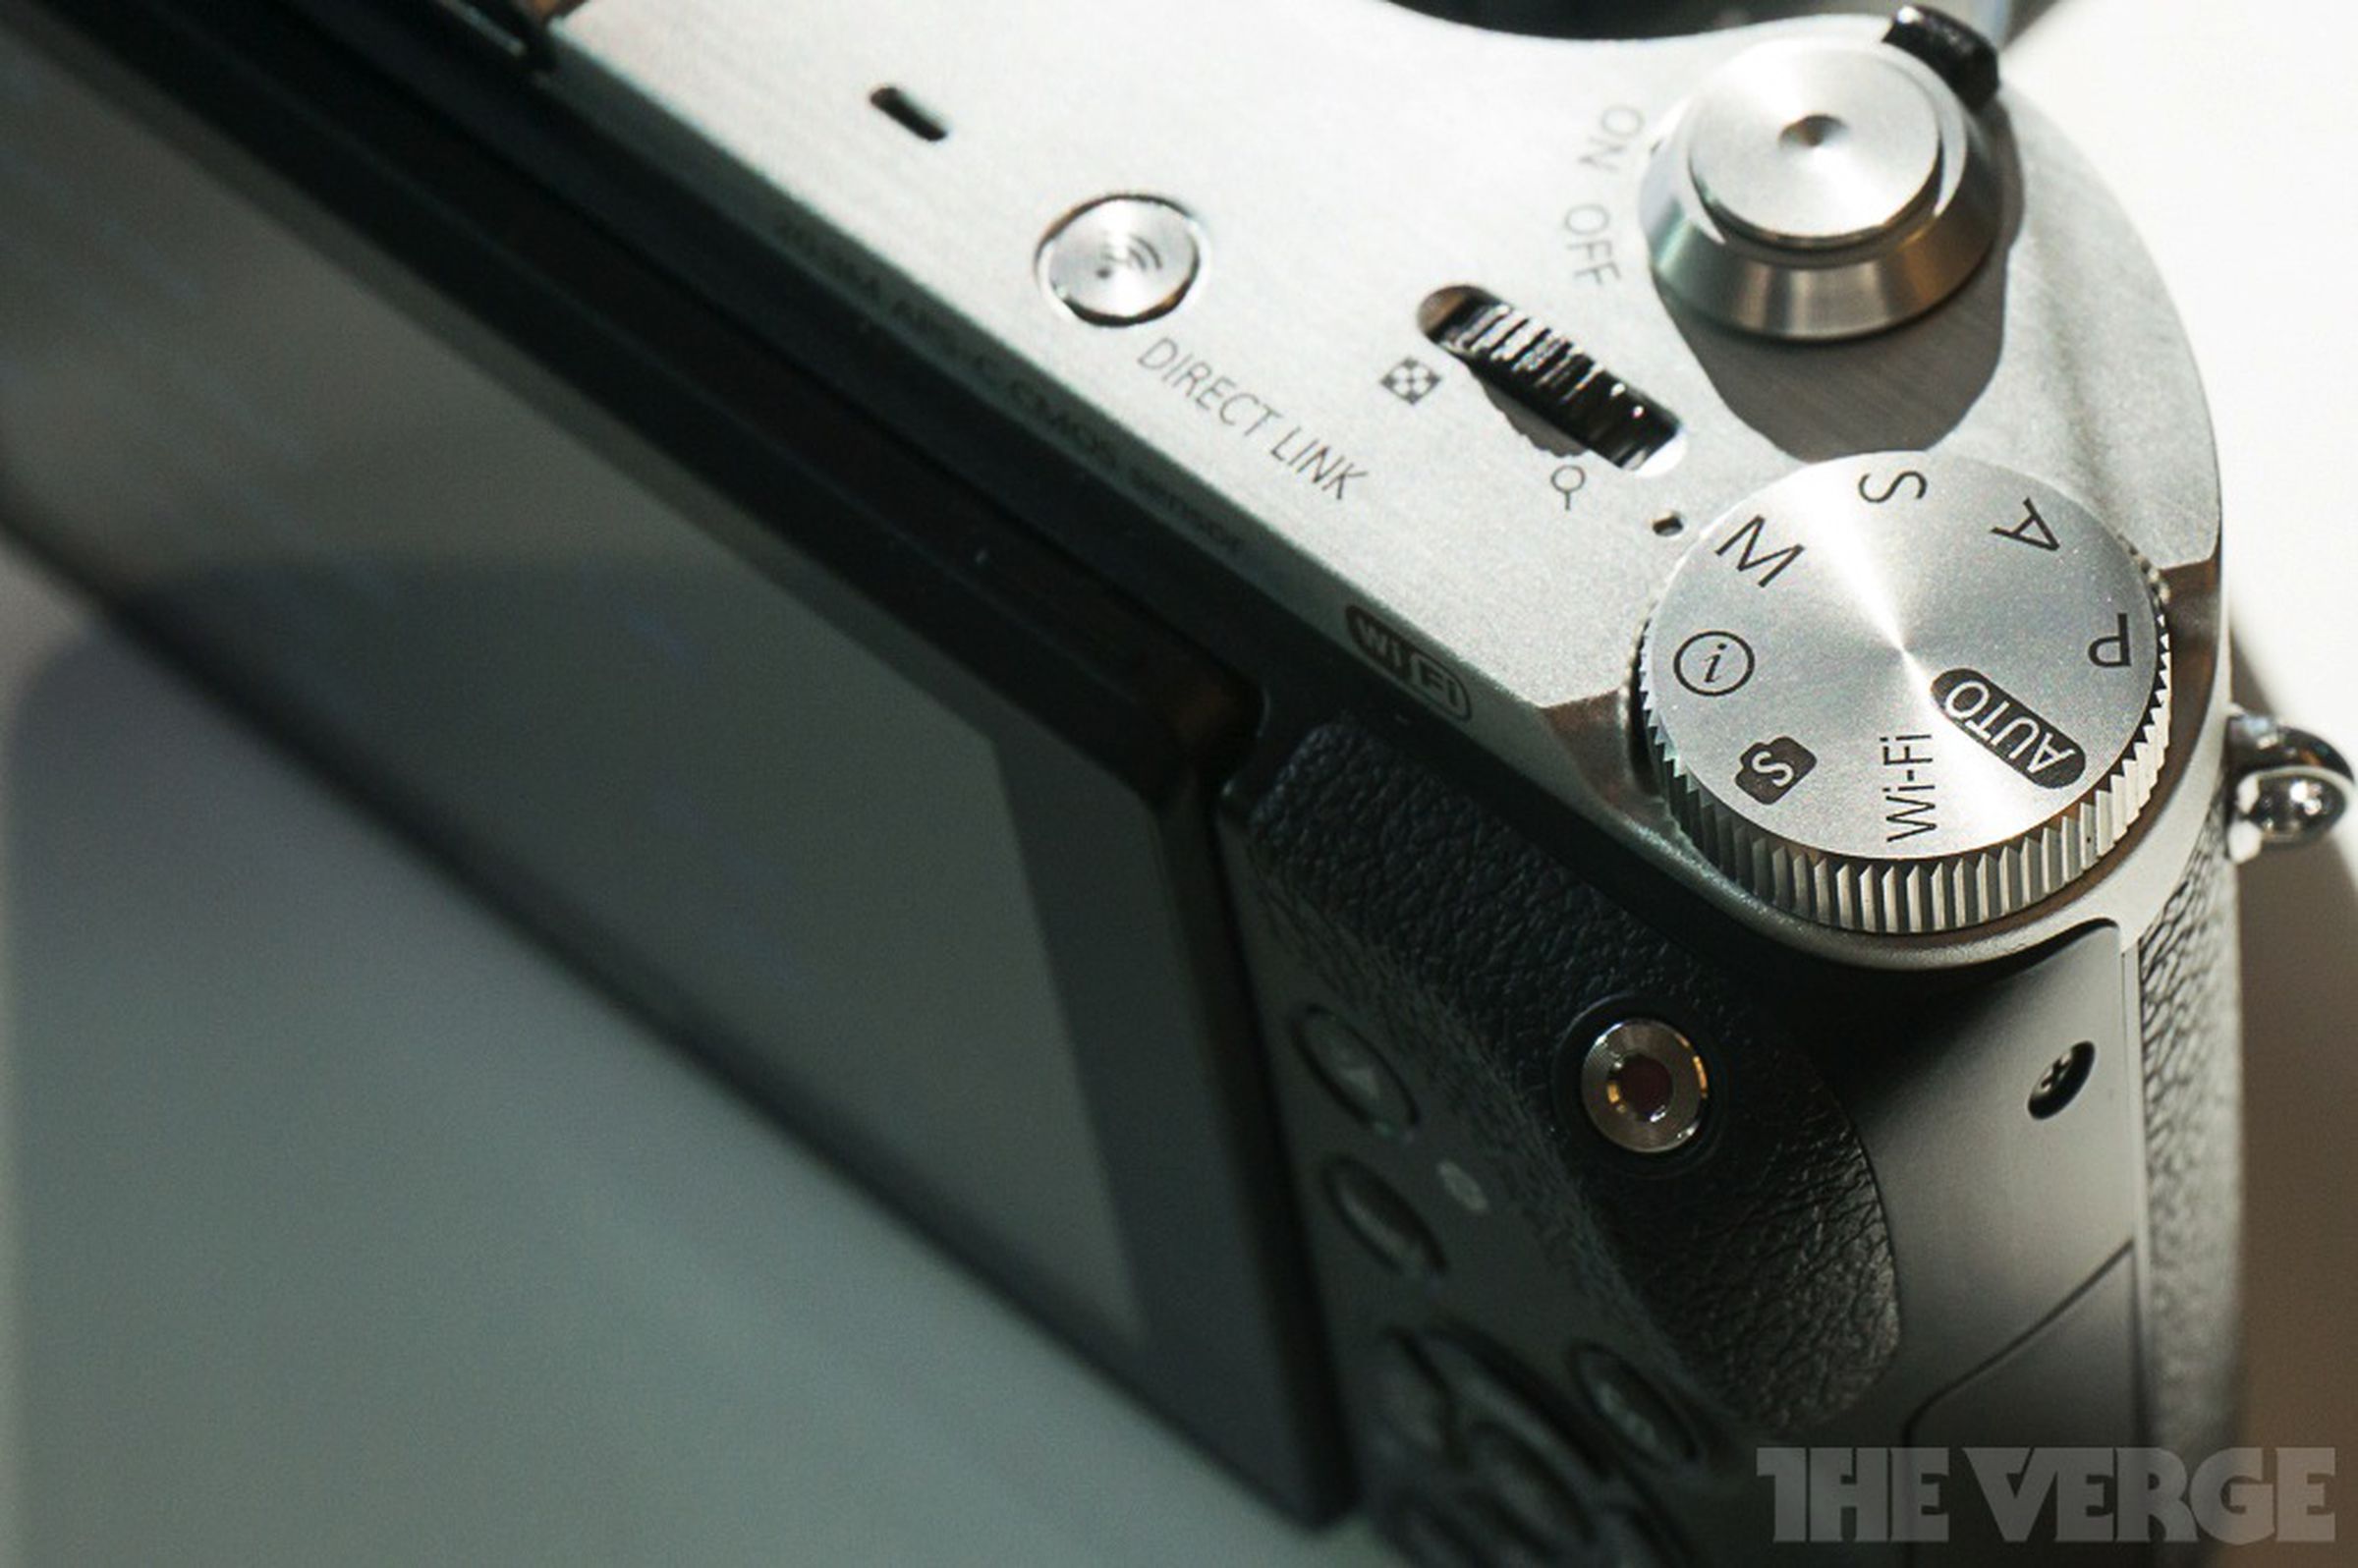 Samsung NX300 mirrorless camera hands-on photos